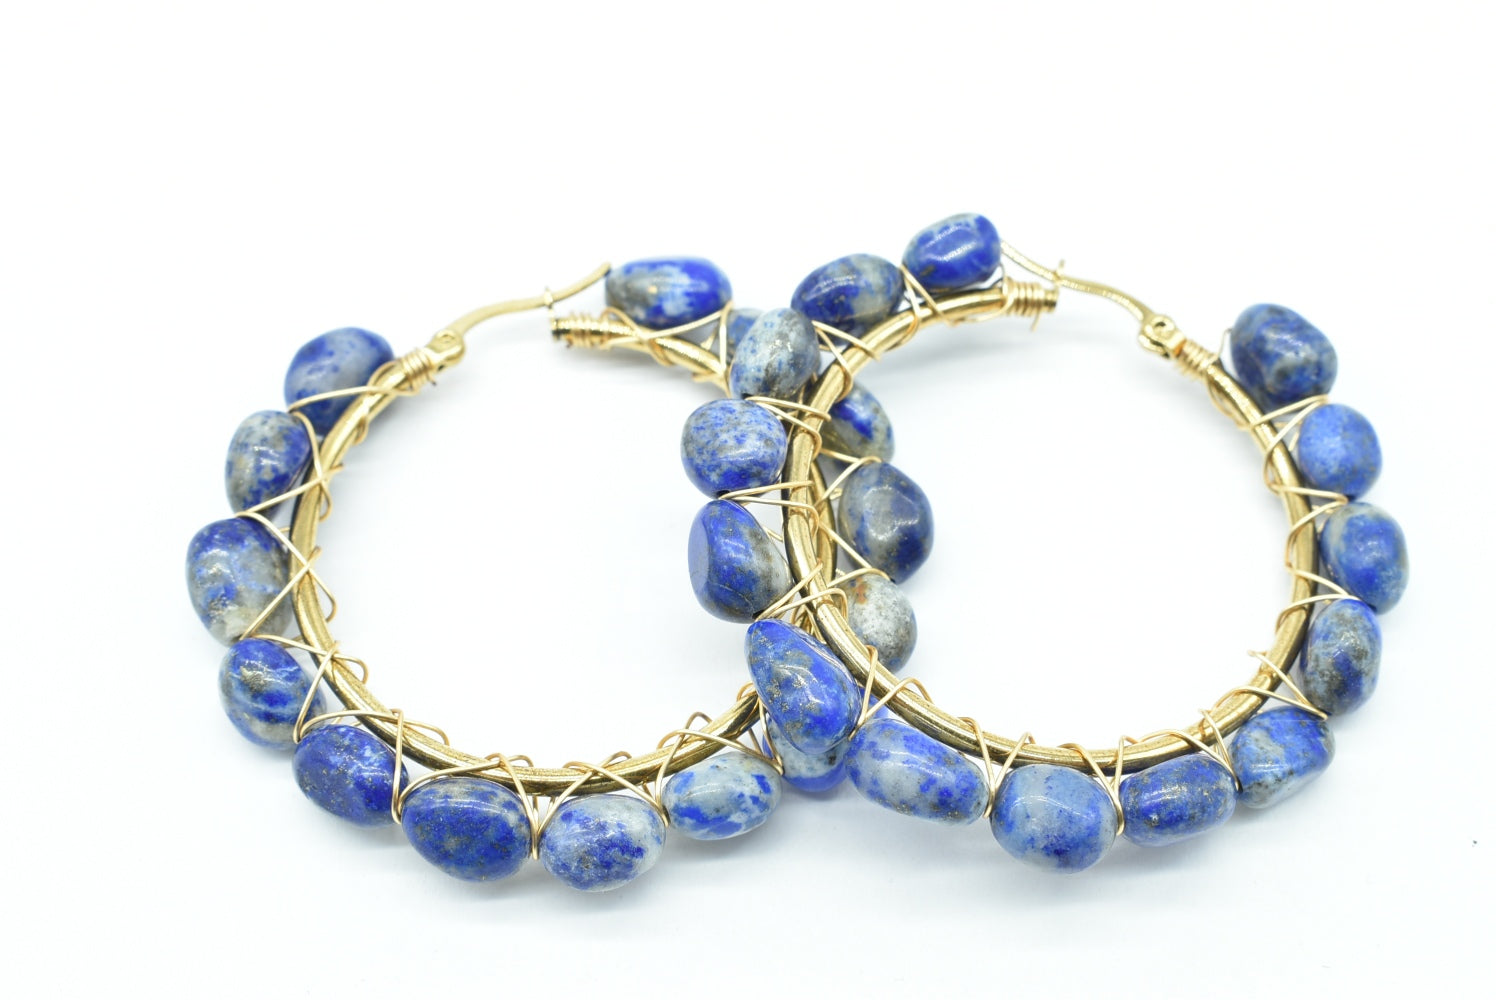 Lapis lazuli stones earrings